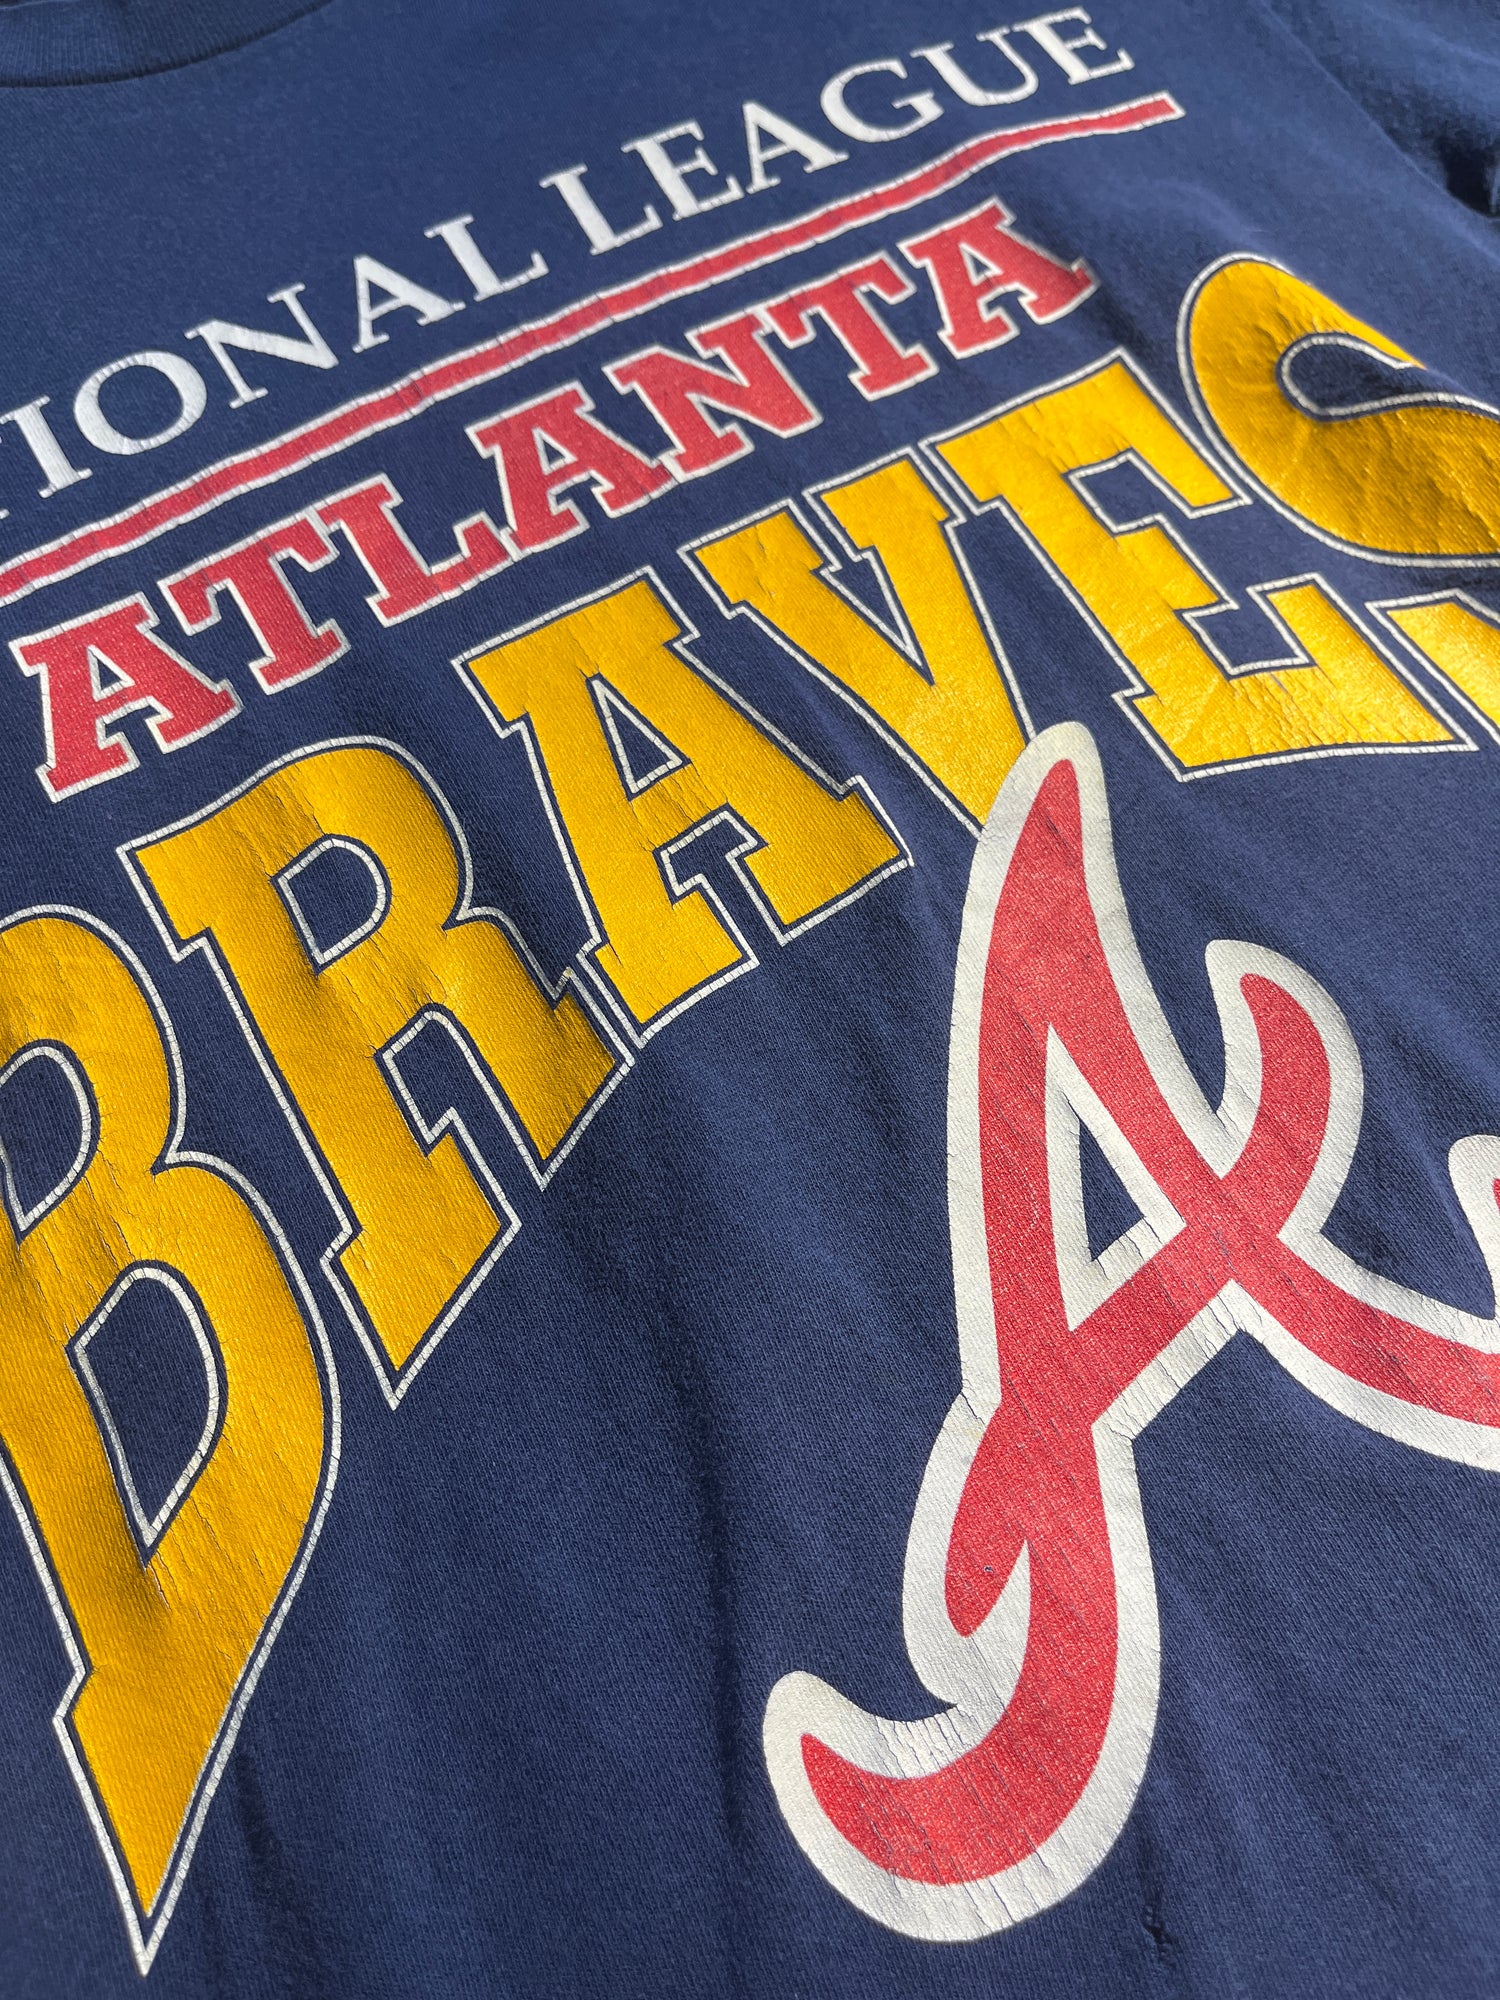 Vintage Atlanta braves starter t shirt